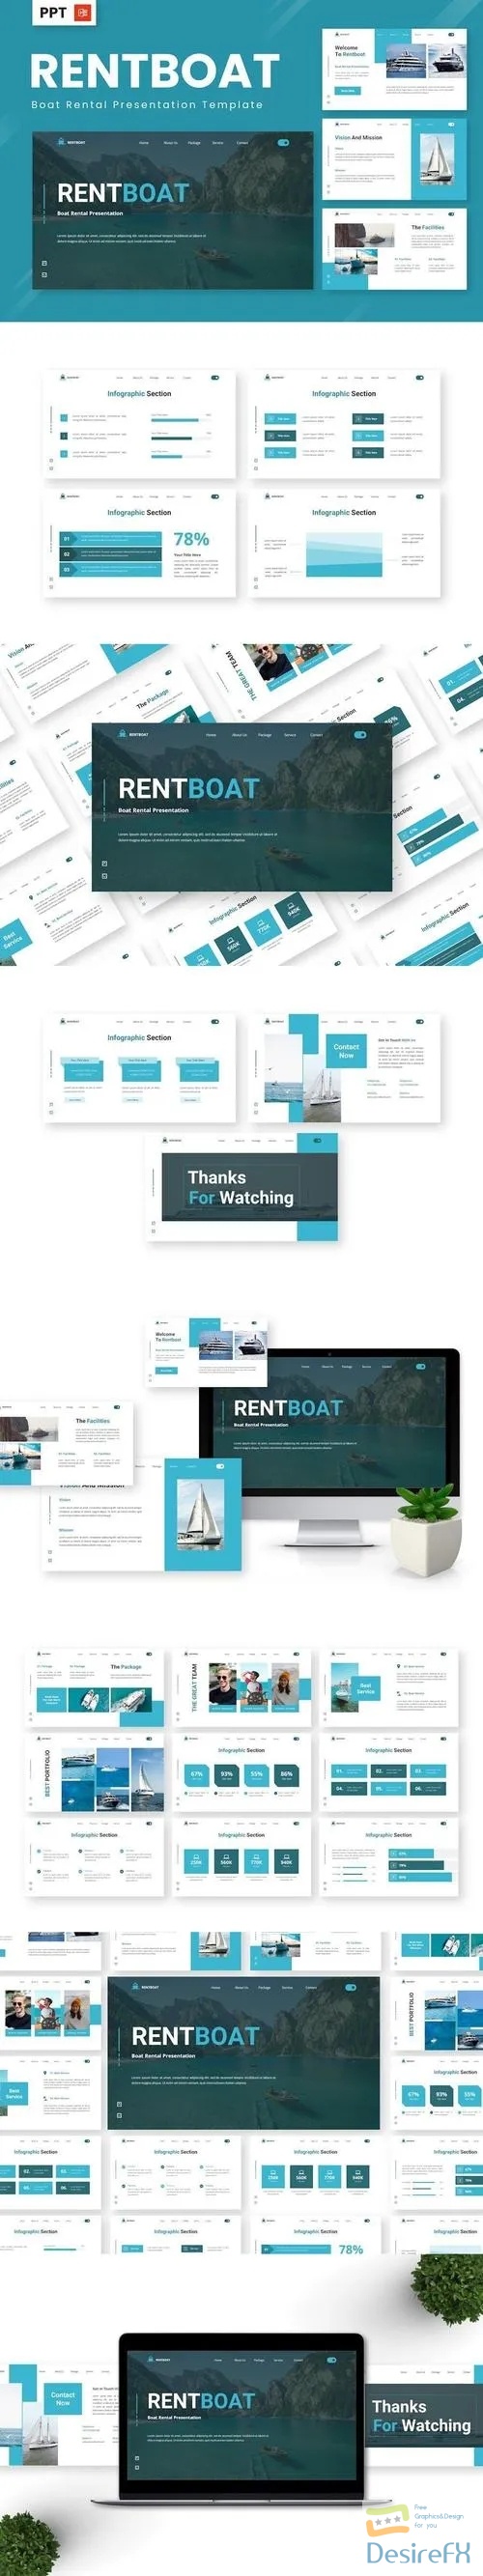 Rentboat - Boat Rental Powerpoint Templates